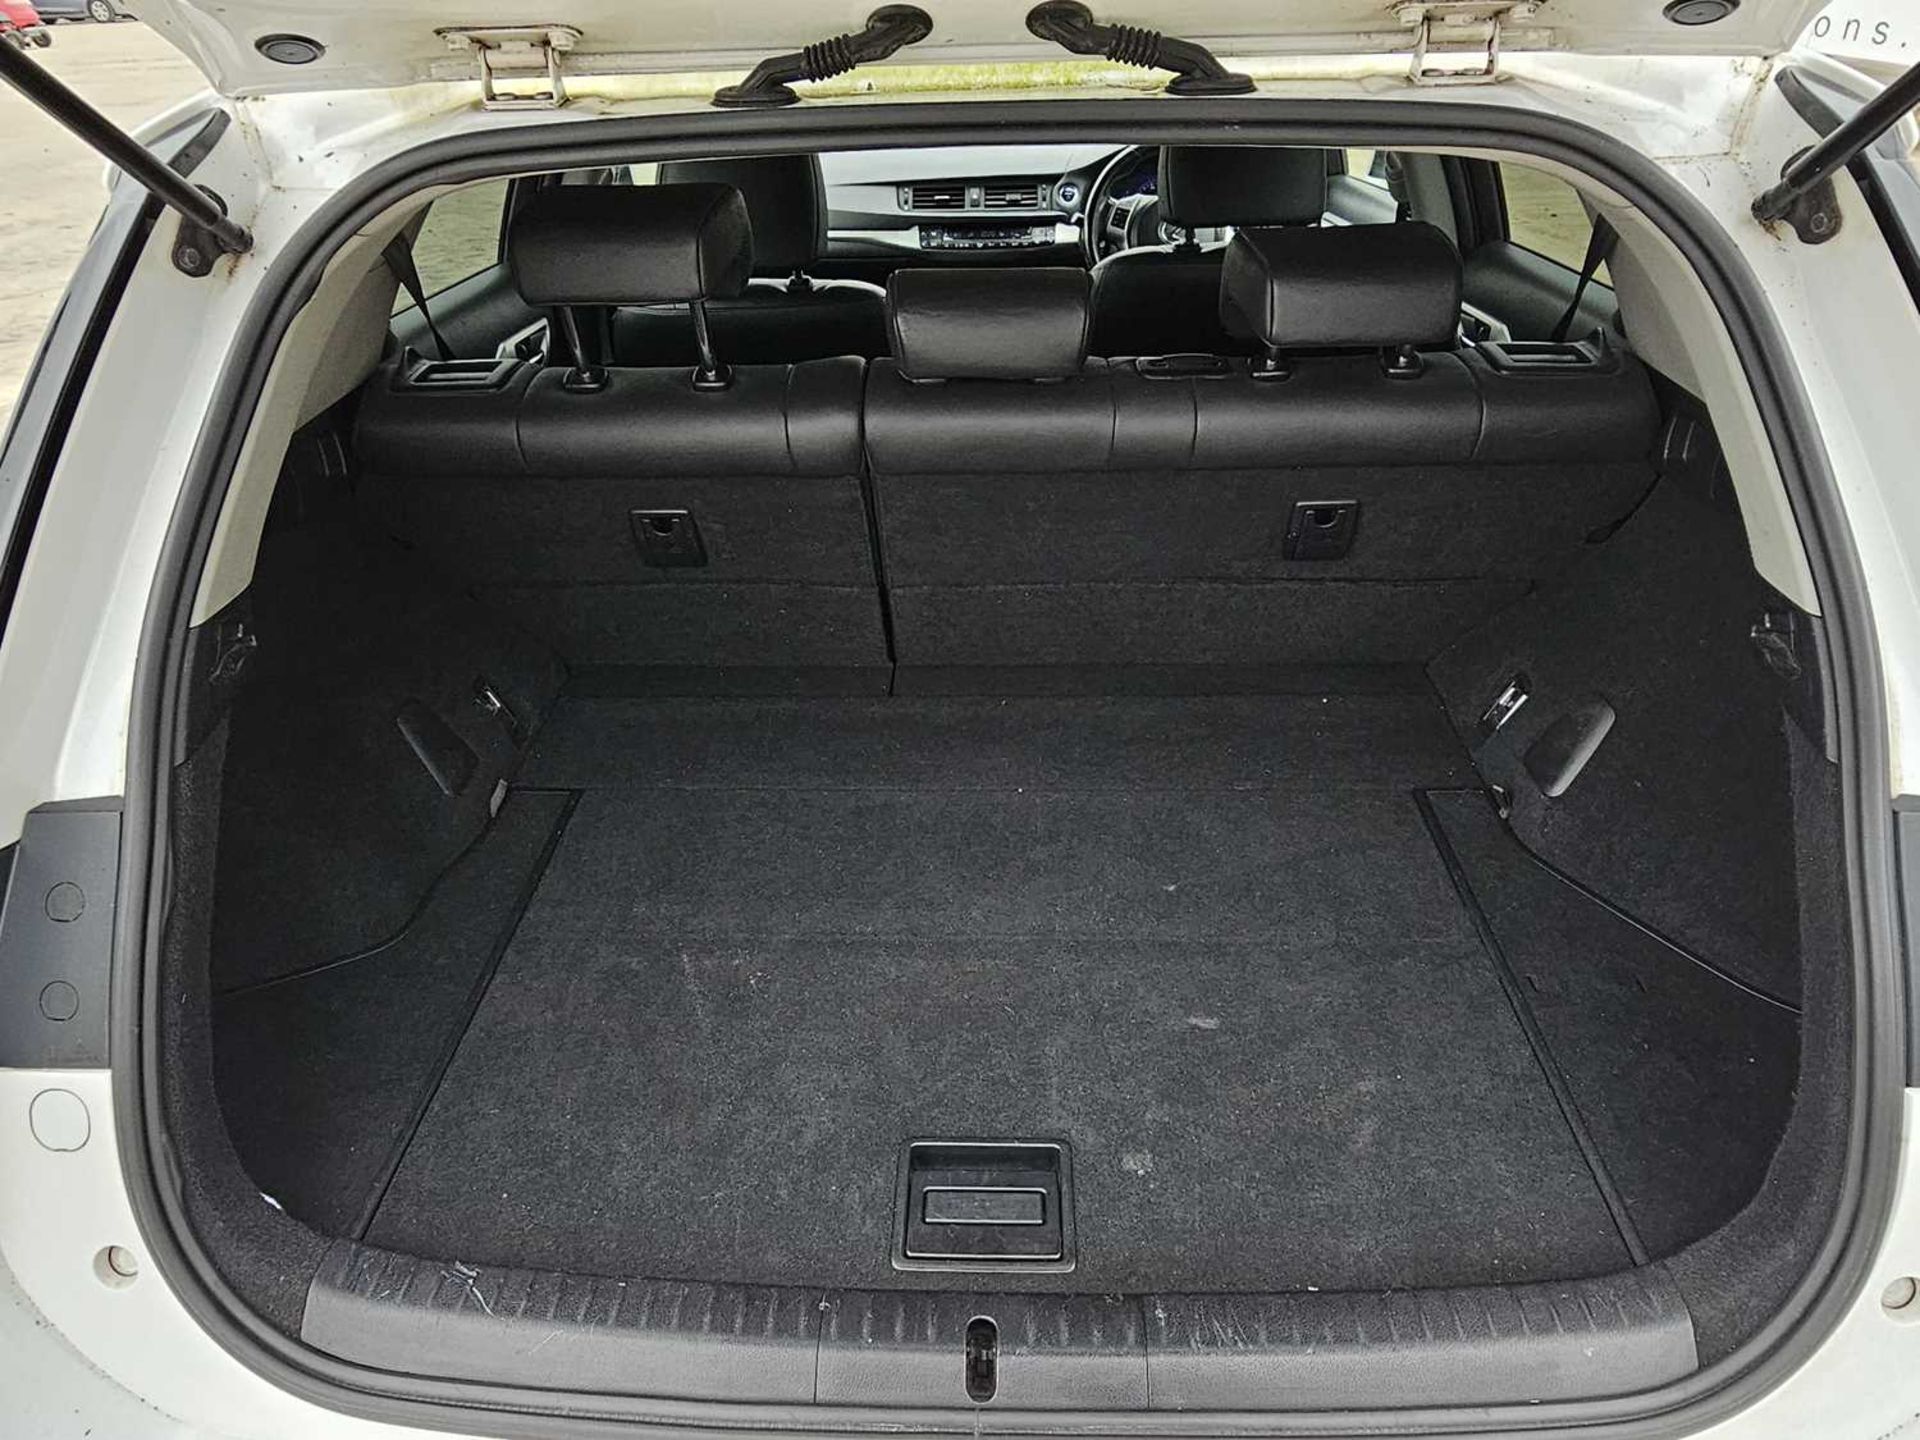 2011 Lexus CT200H Se-L Cvt Hybrid, Auto, Full Leather, Heated Seats, Bluetooth (NO VAT)(Reg. Docs. A - Image 10 of 26